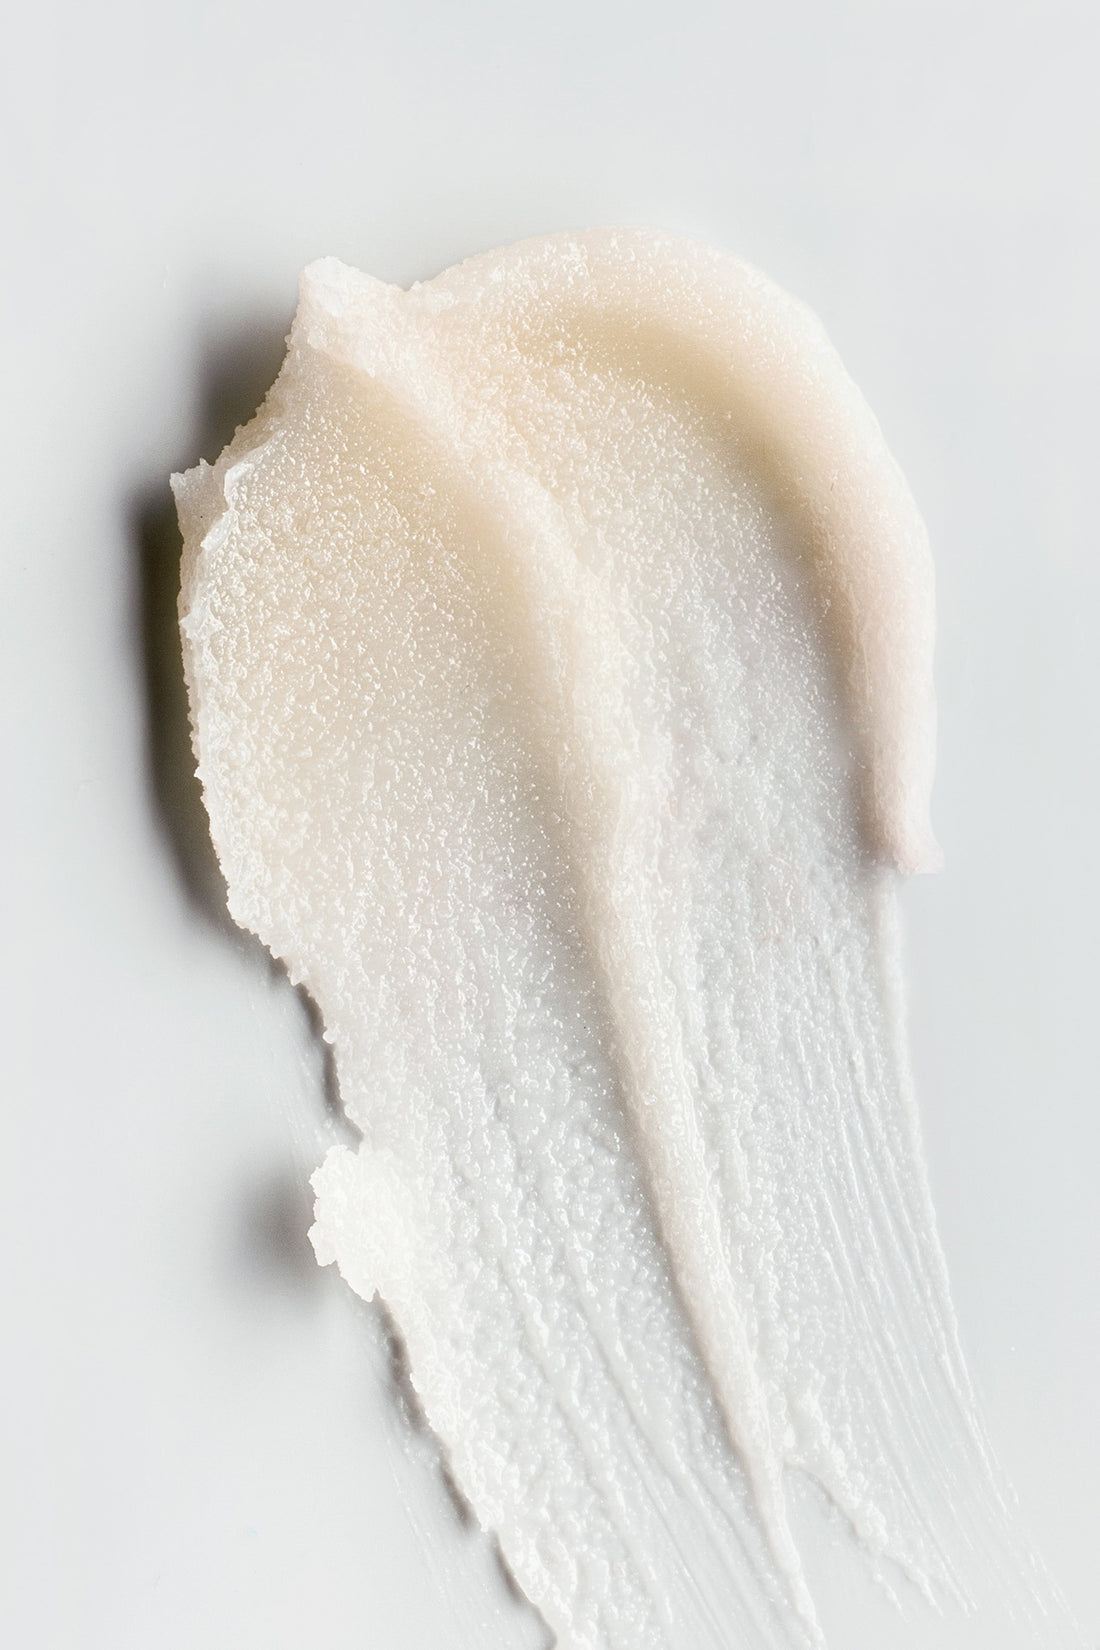 goop image of sugar scrub